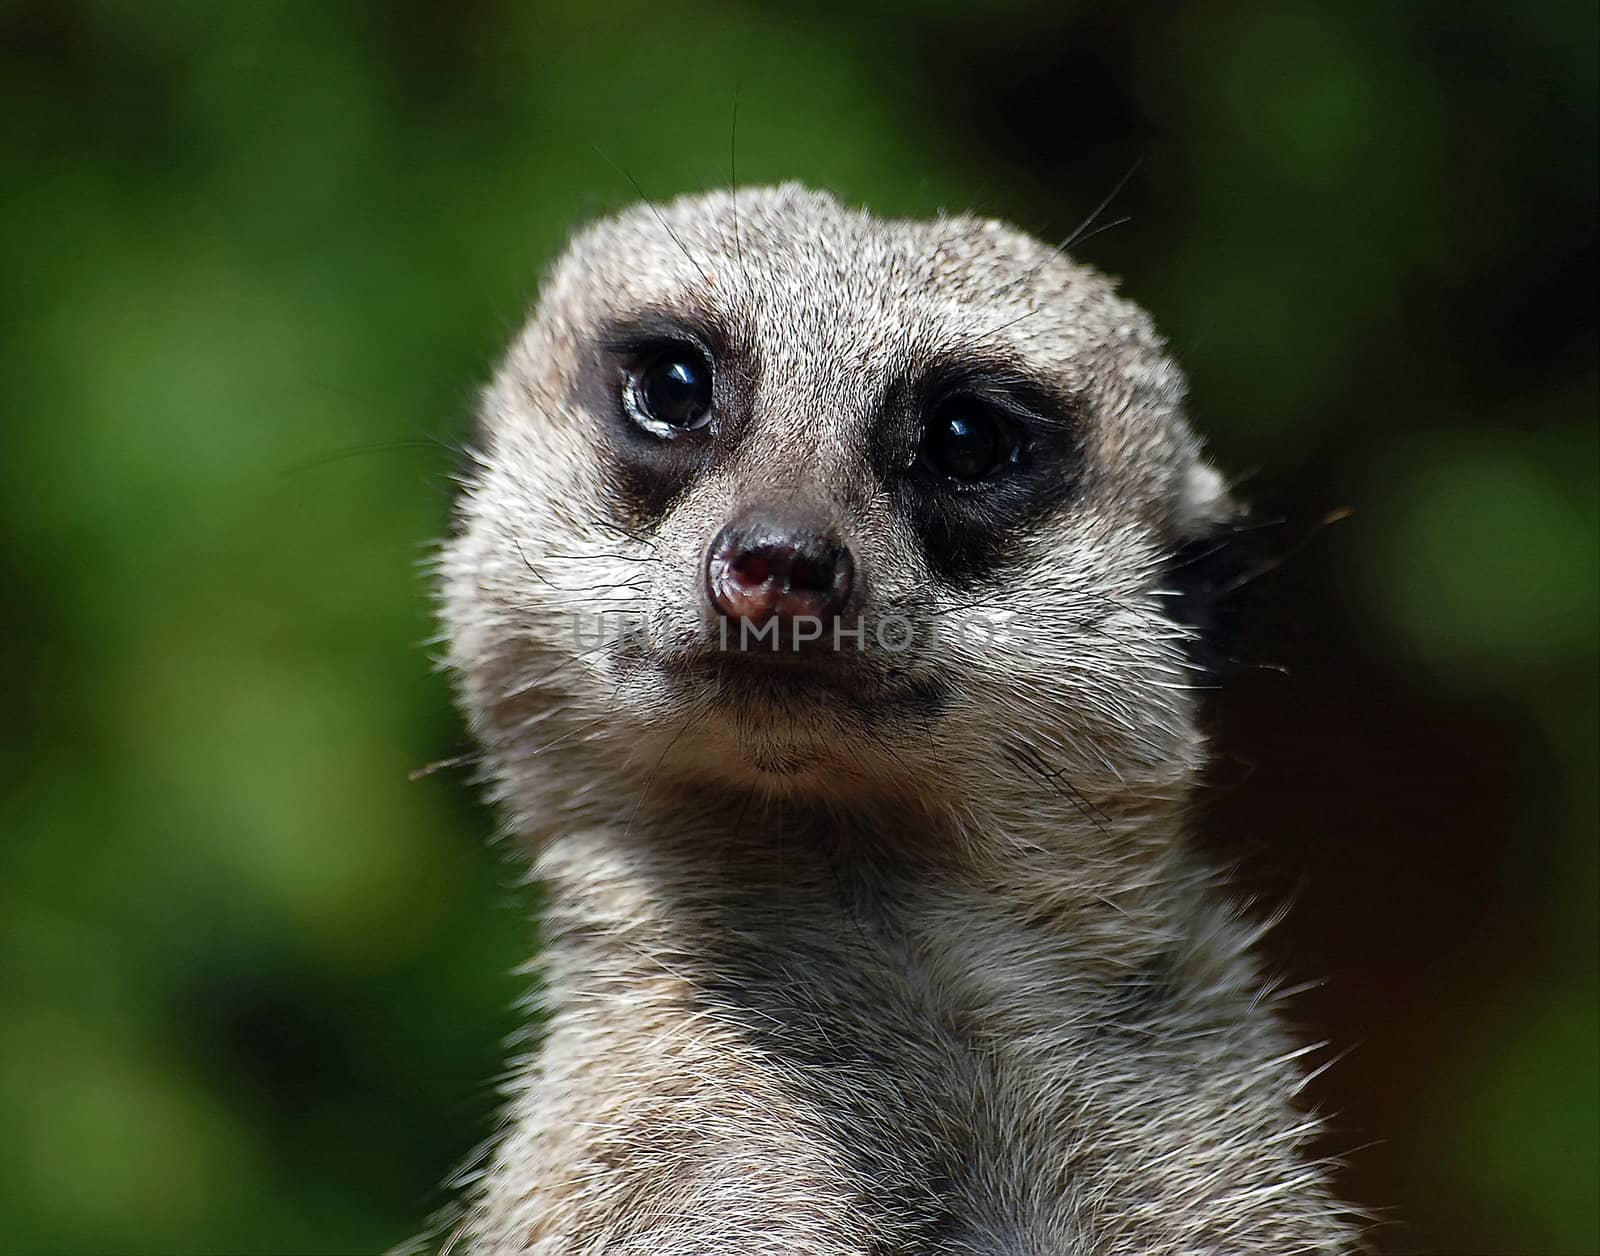 A close-up portrait of a Meerkat